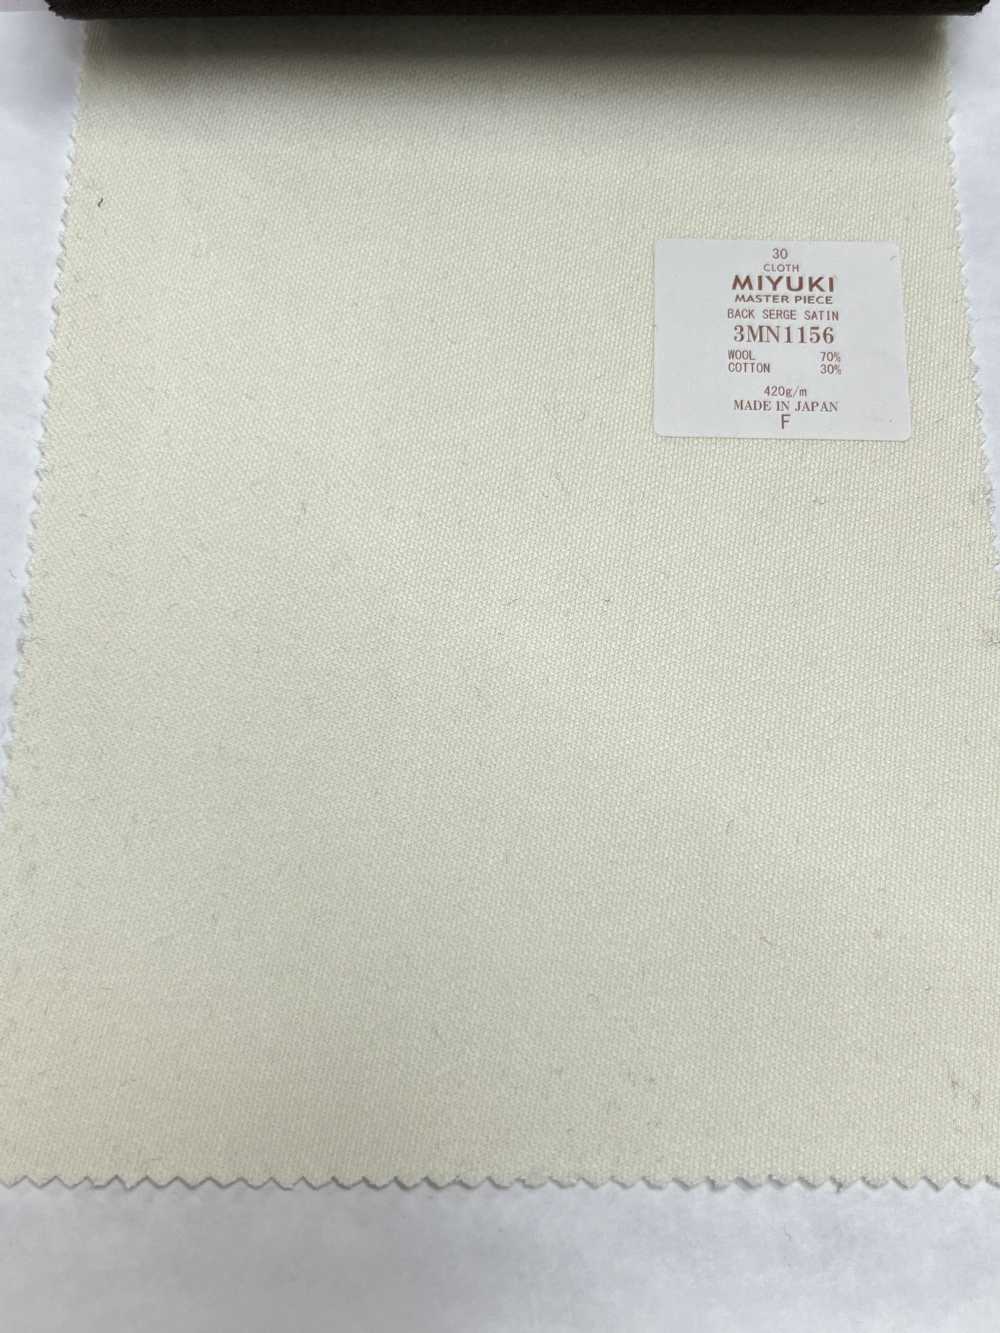 3MN1156 Creative Masterpiece Serge Satin Plain Off-White[Textil] Miyuki-Keori (Miyuki)